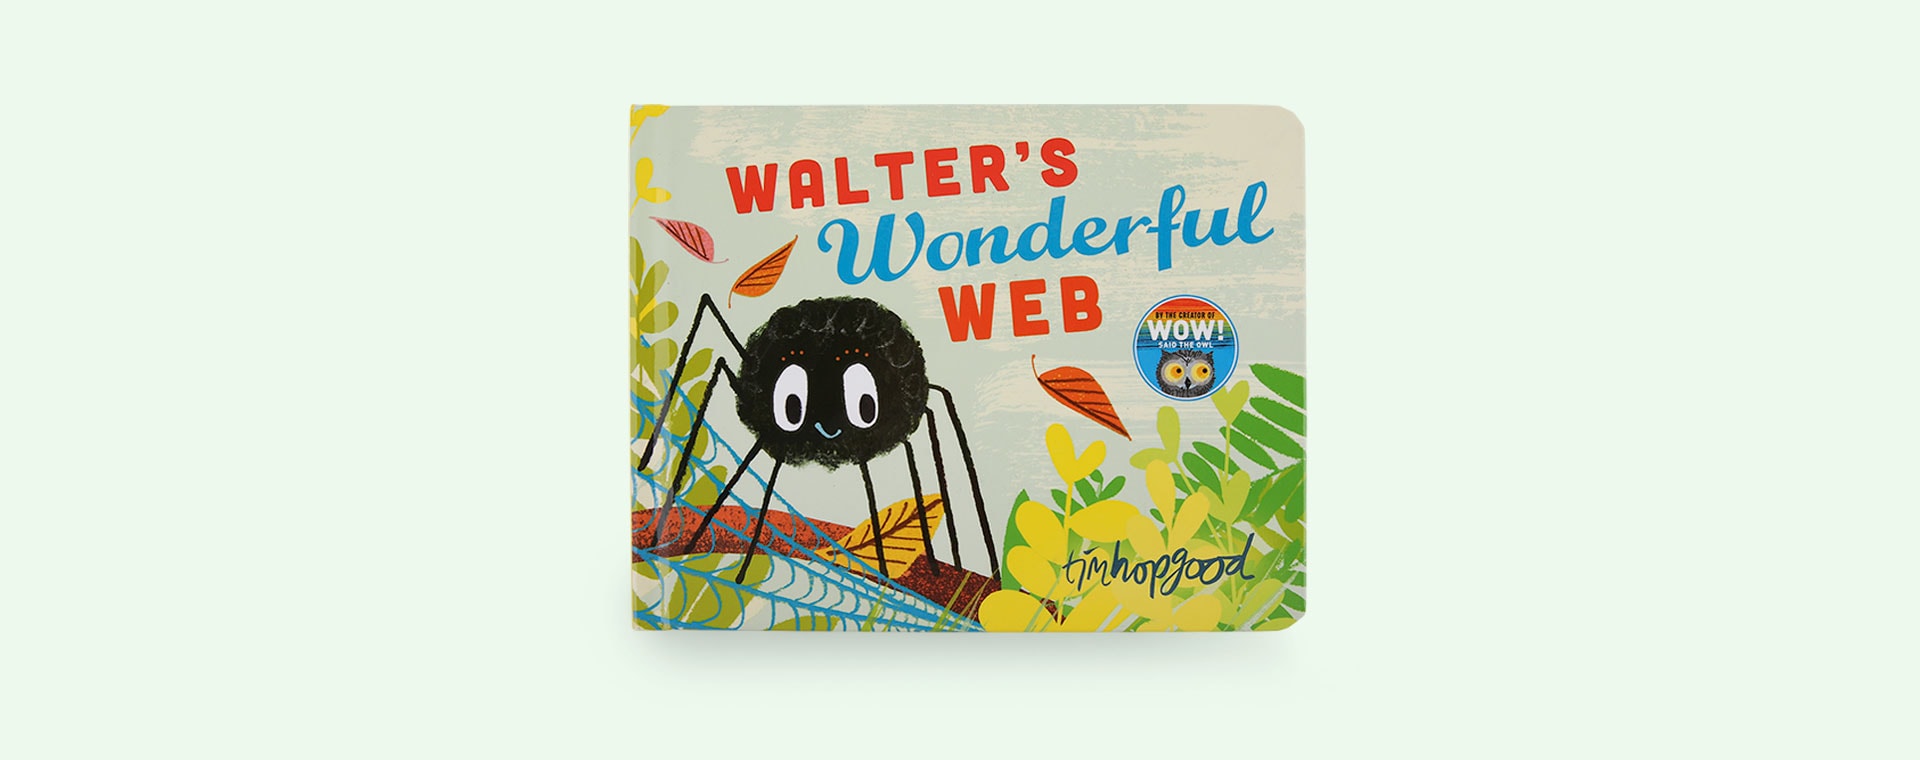 Walters Wonderful web bookspeed Walters Wonderful Web